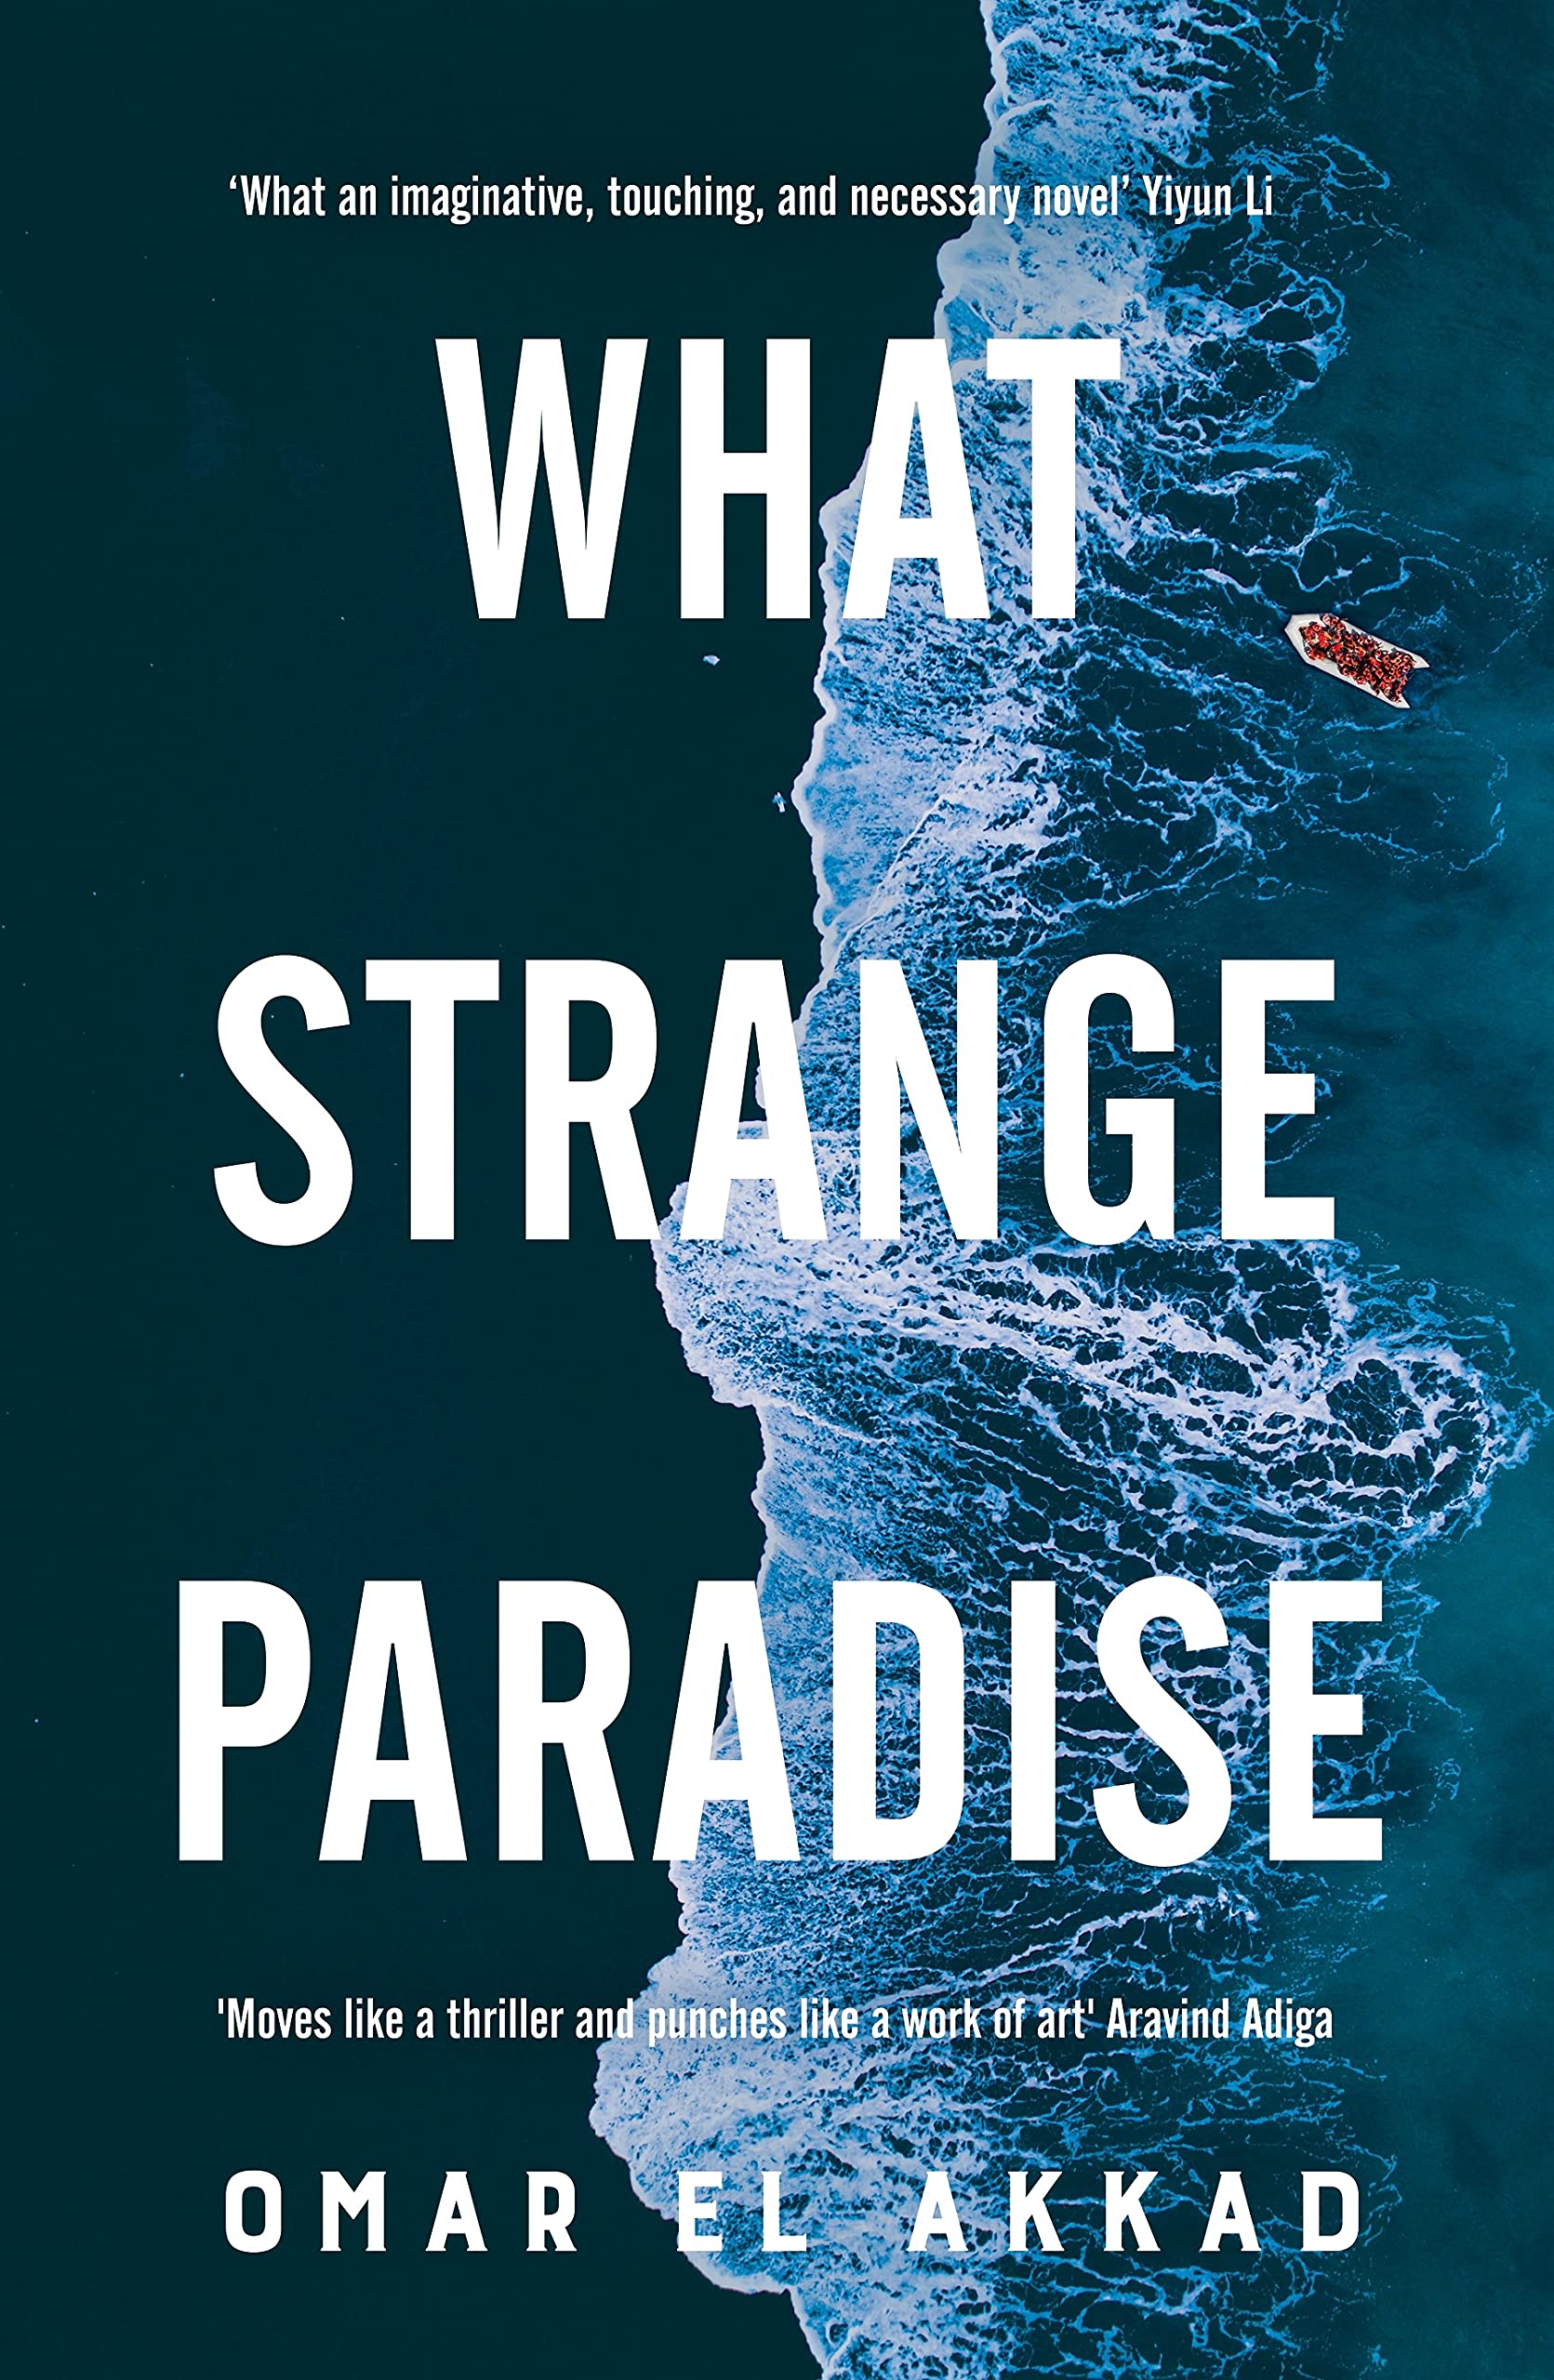 What Strange Paradise: A novel